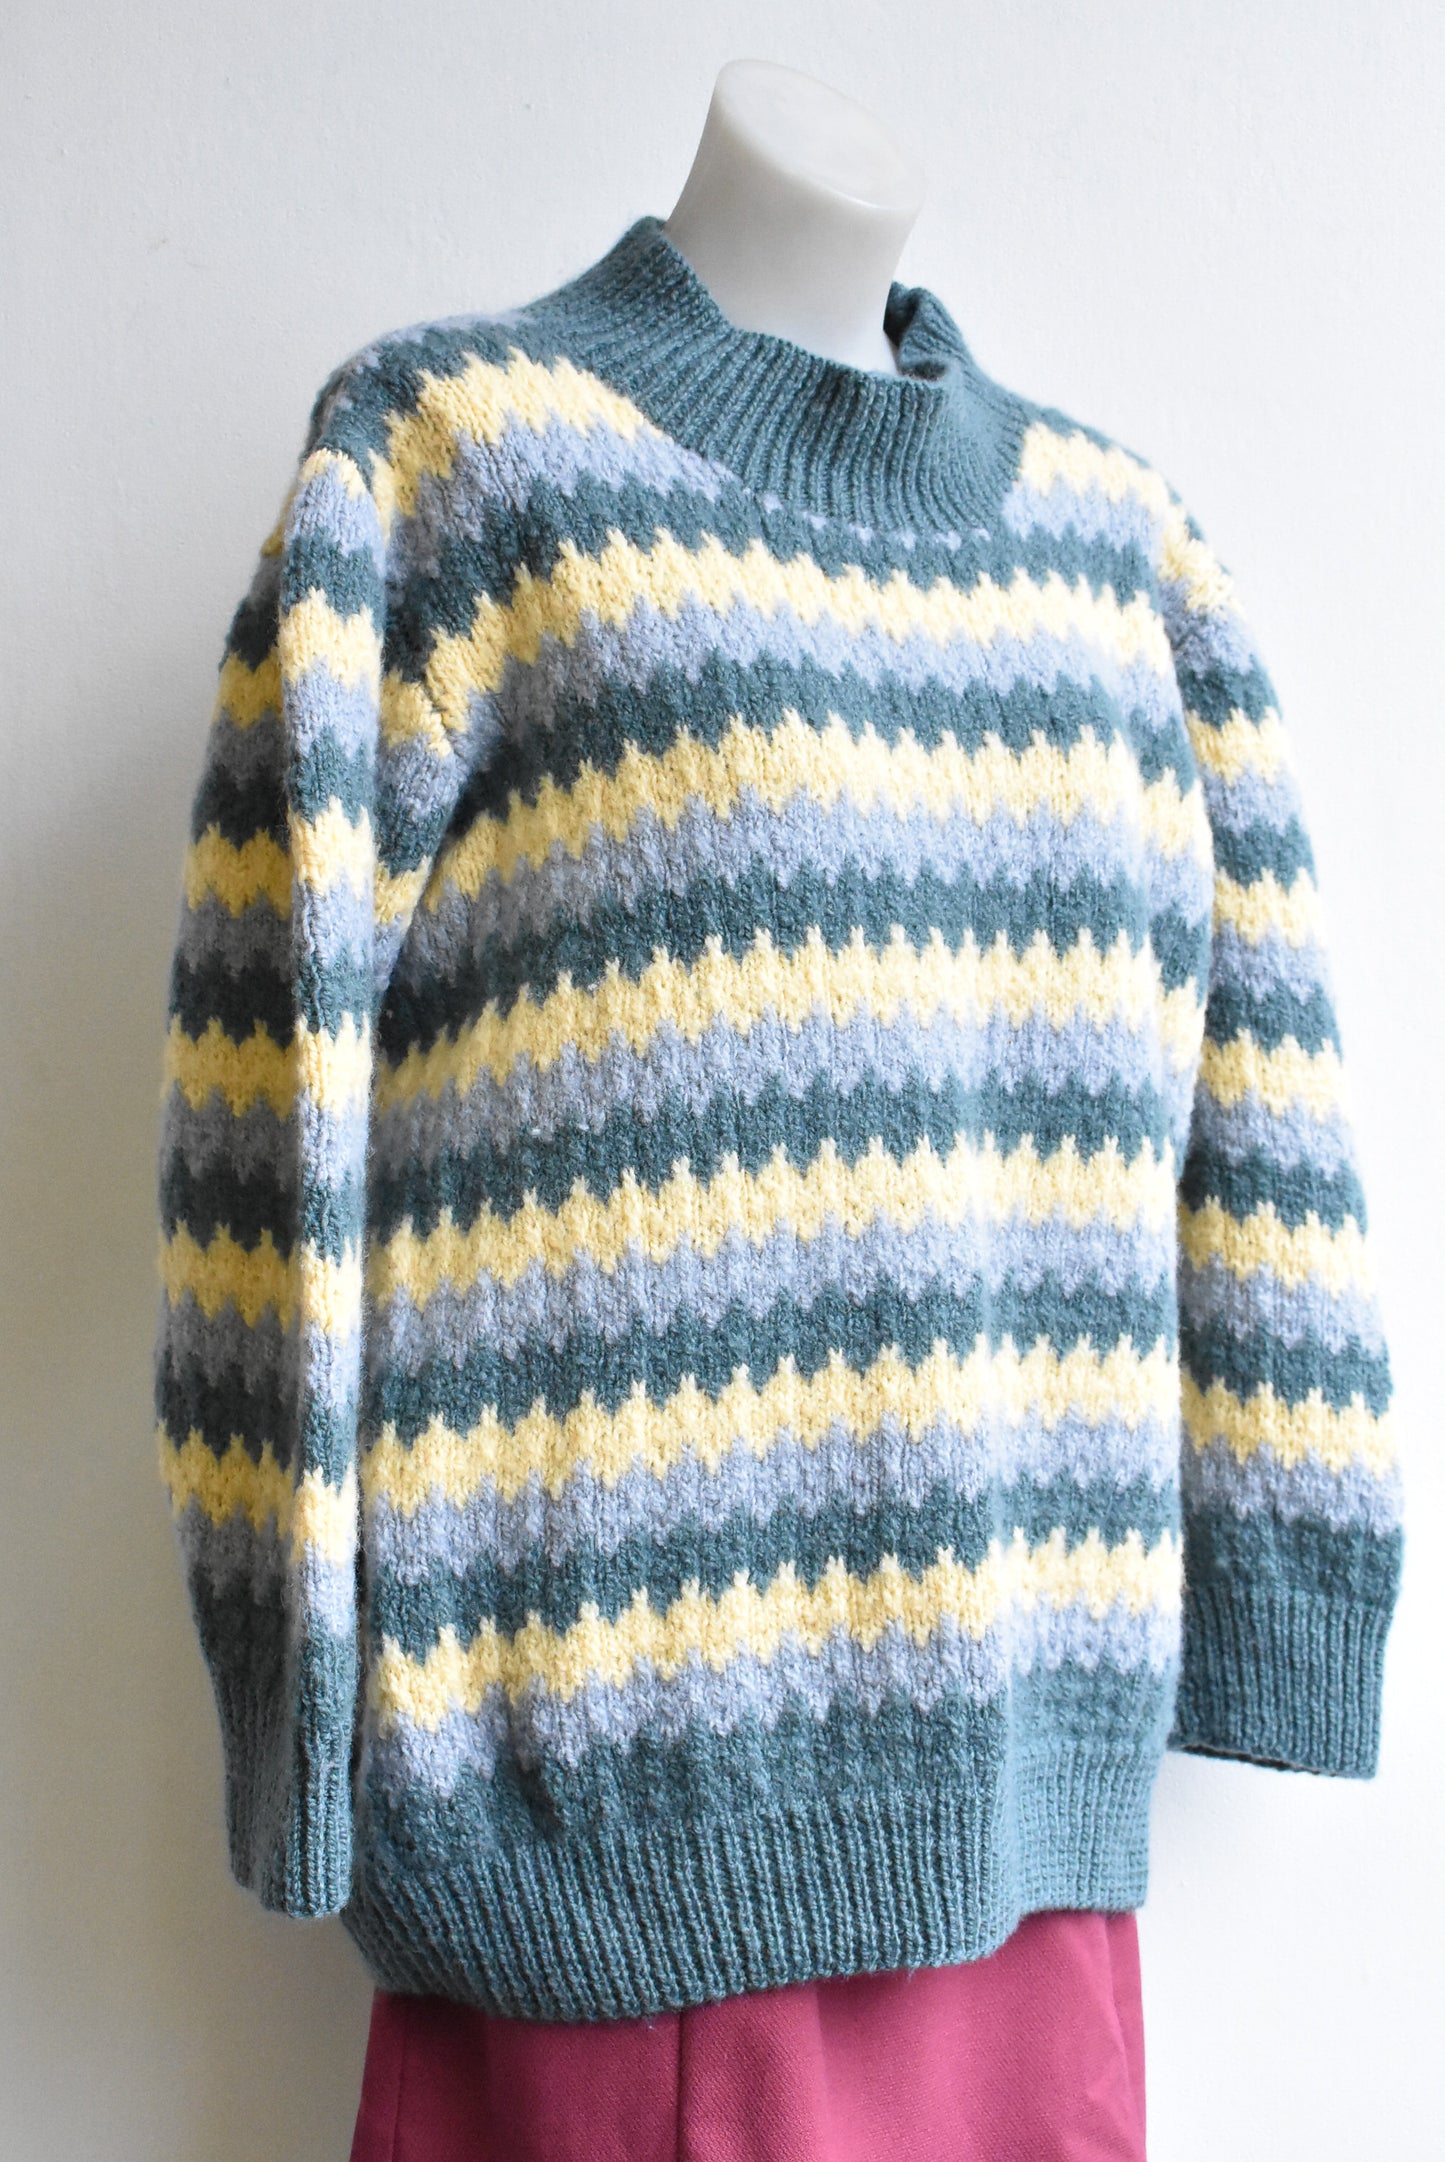 Patterned wool jumper, size M/L